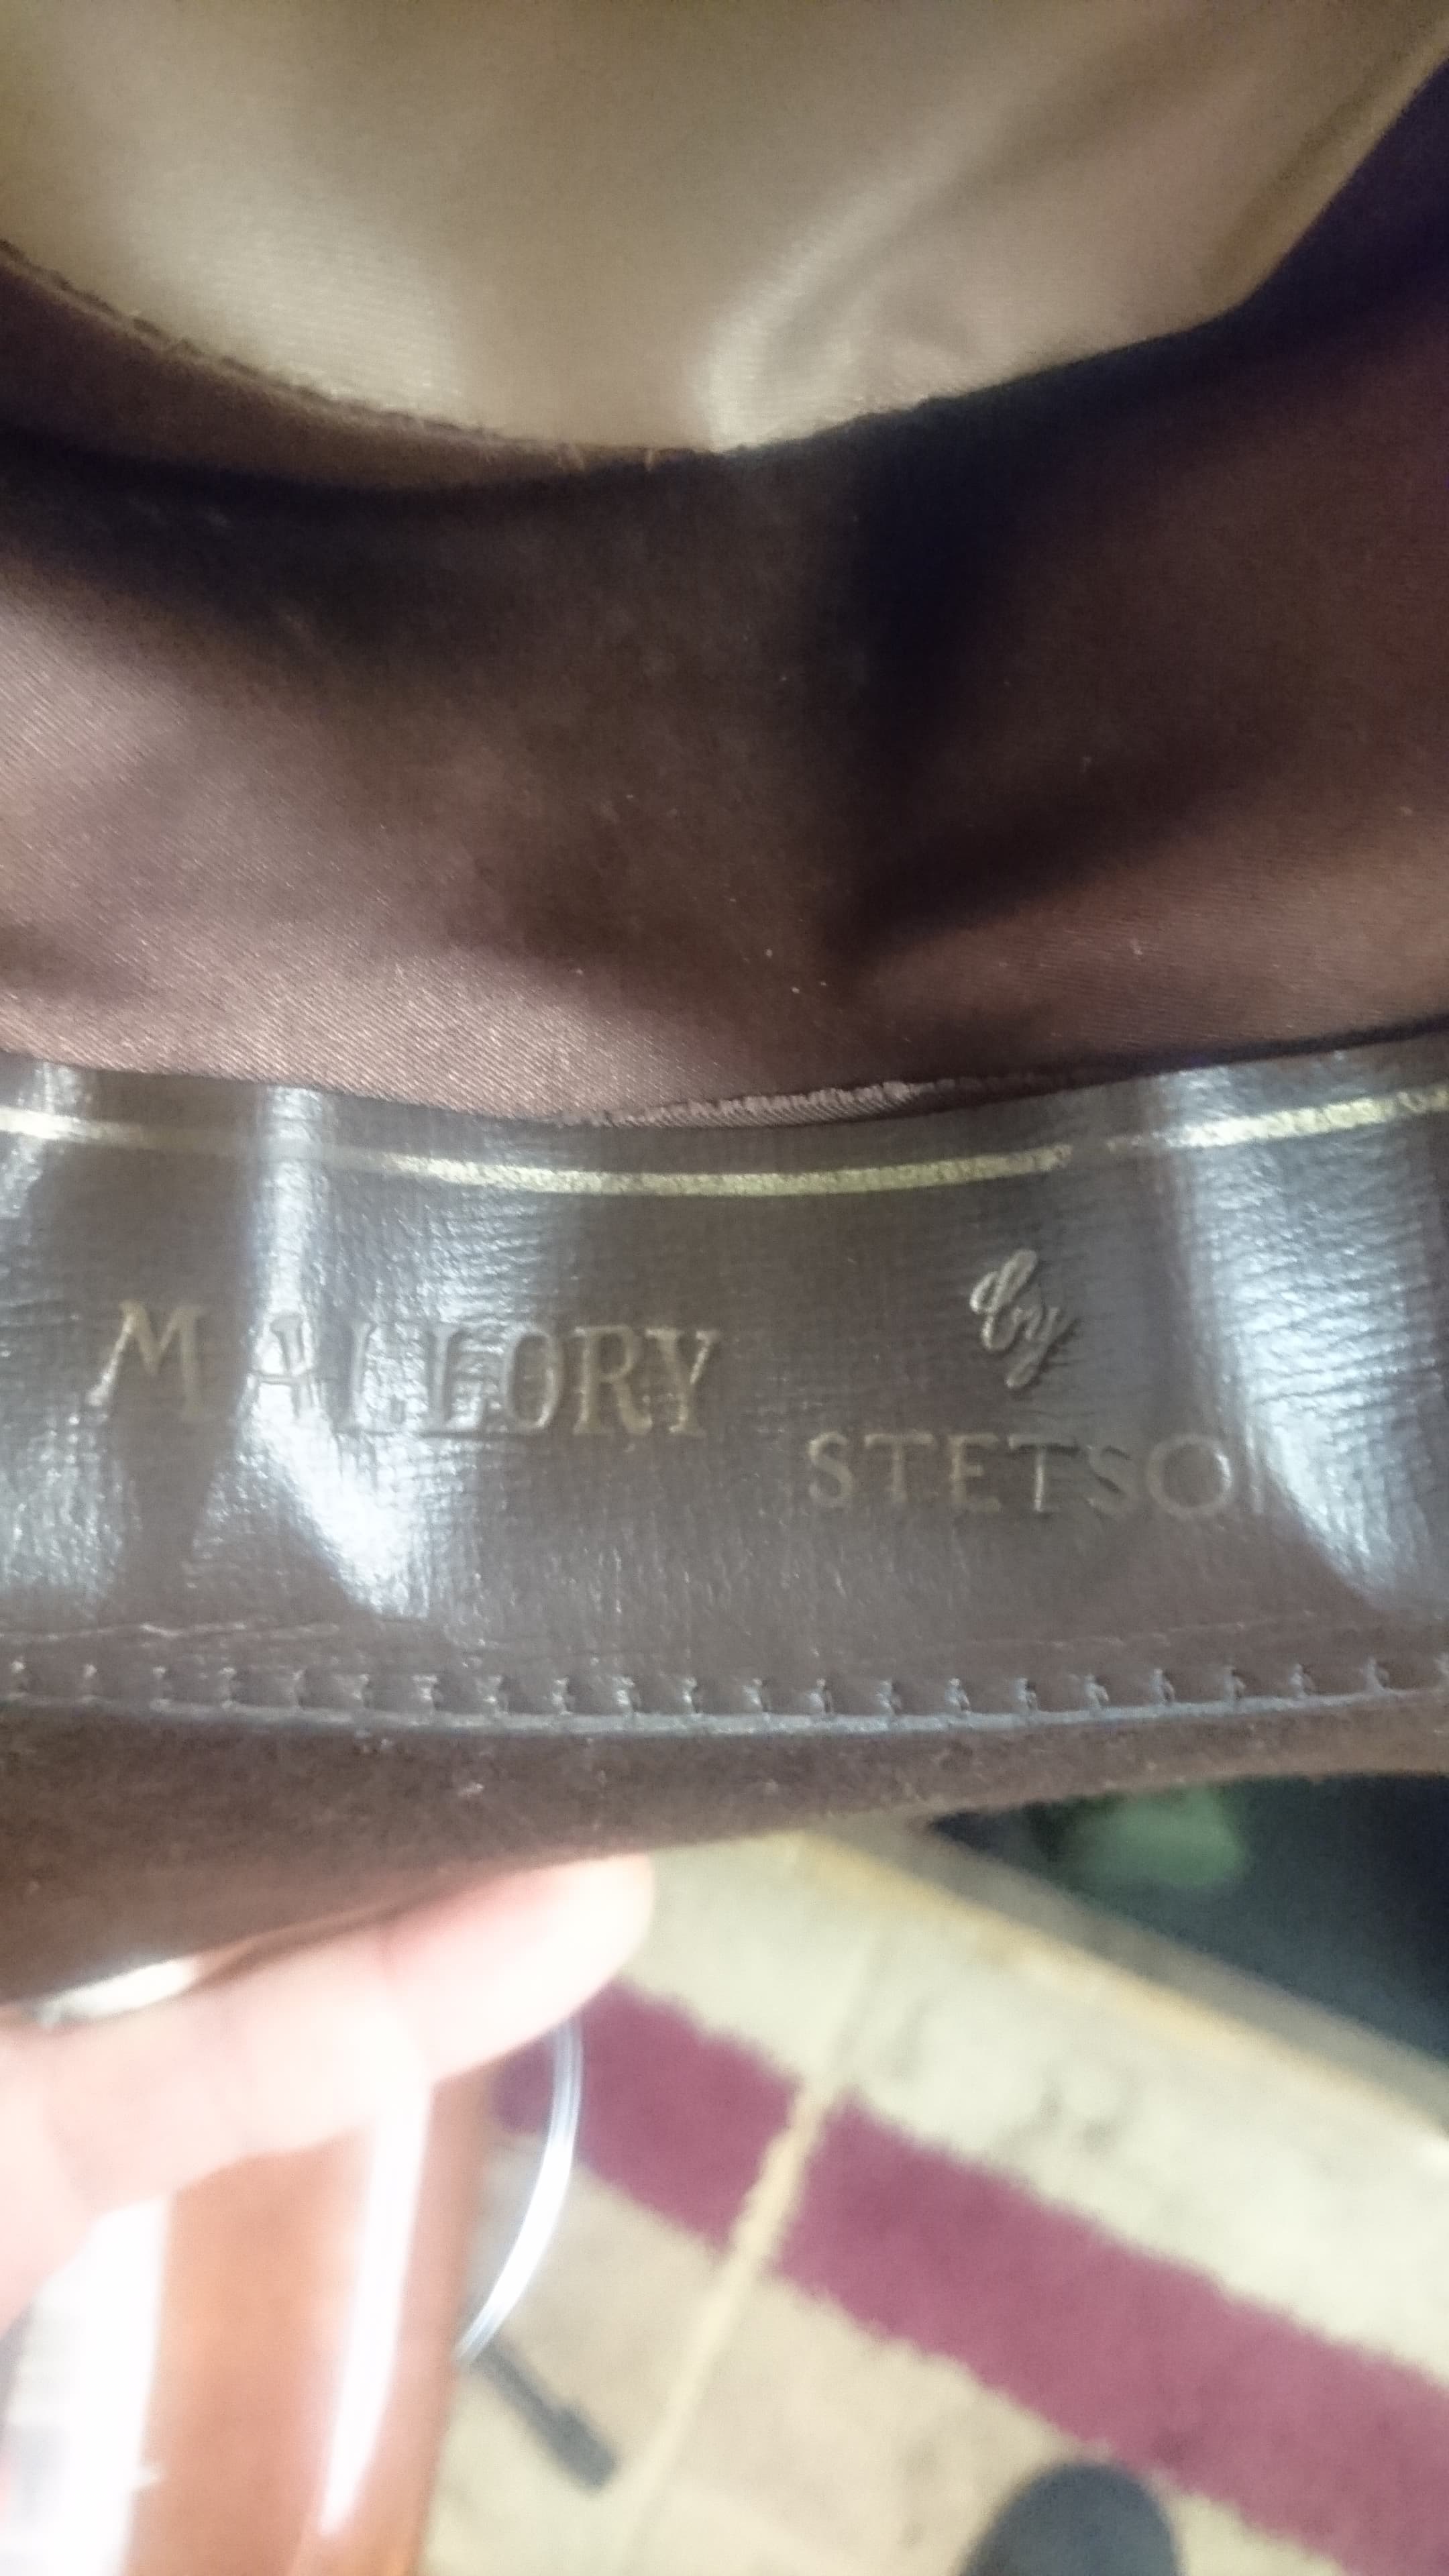 Mallory by Stetson stamp on headband.jpg